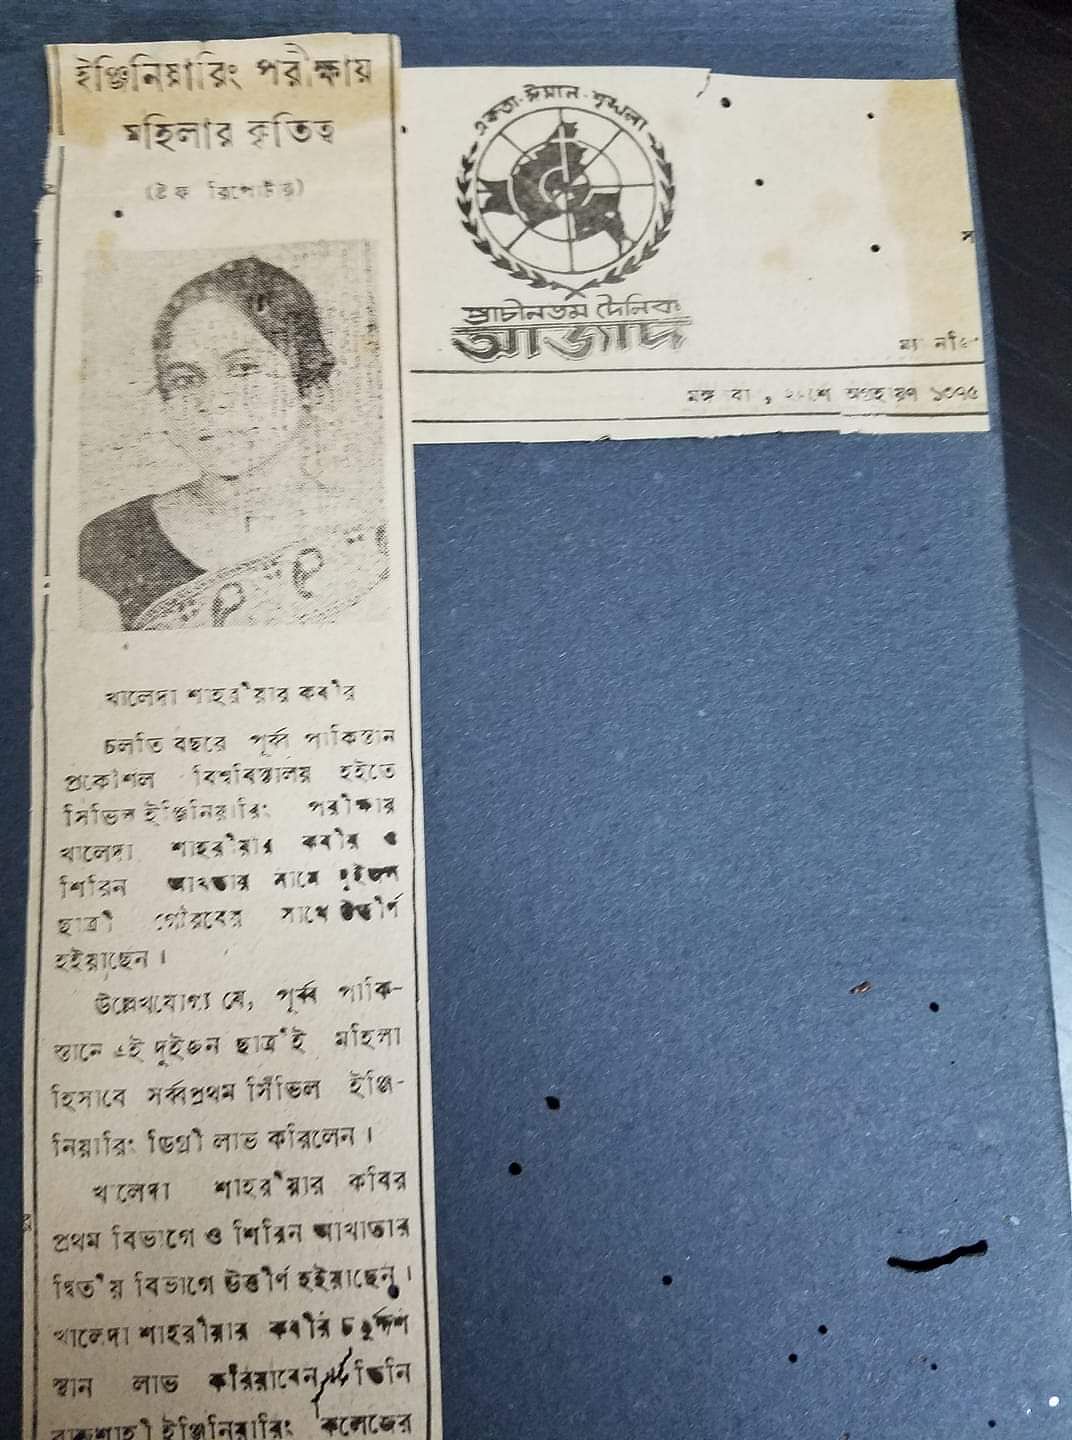 A photo of Dainik Azad newspaper page shows Khaleda Shahriar with her achievement. Photo: Galib Ashraf